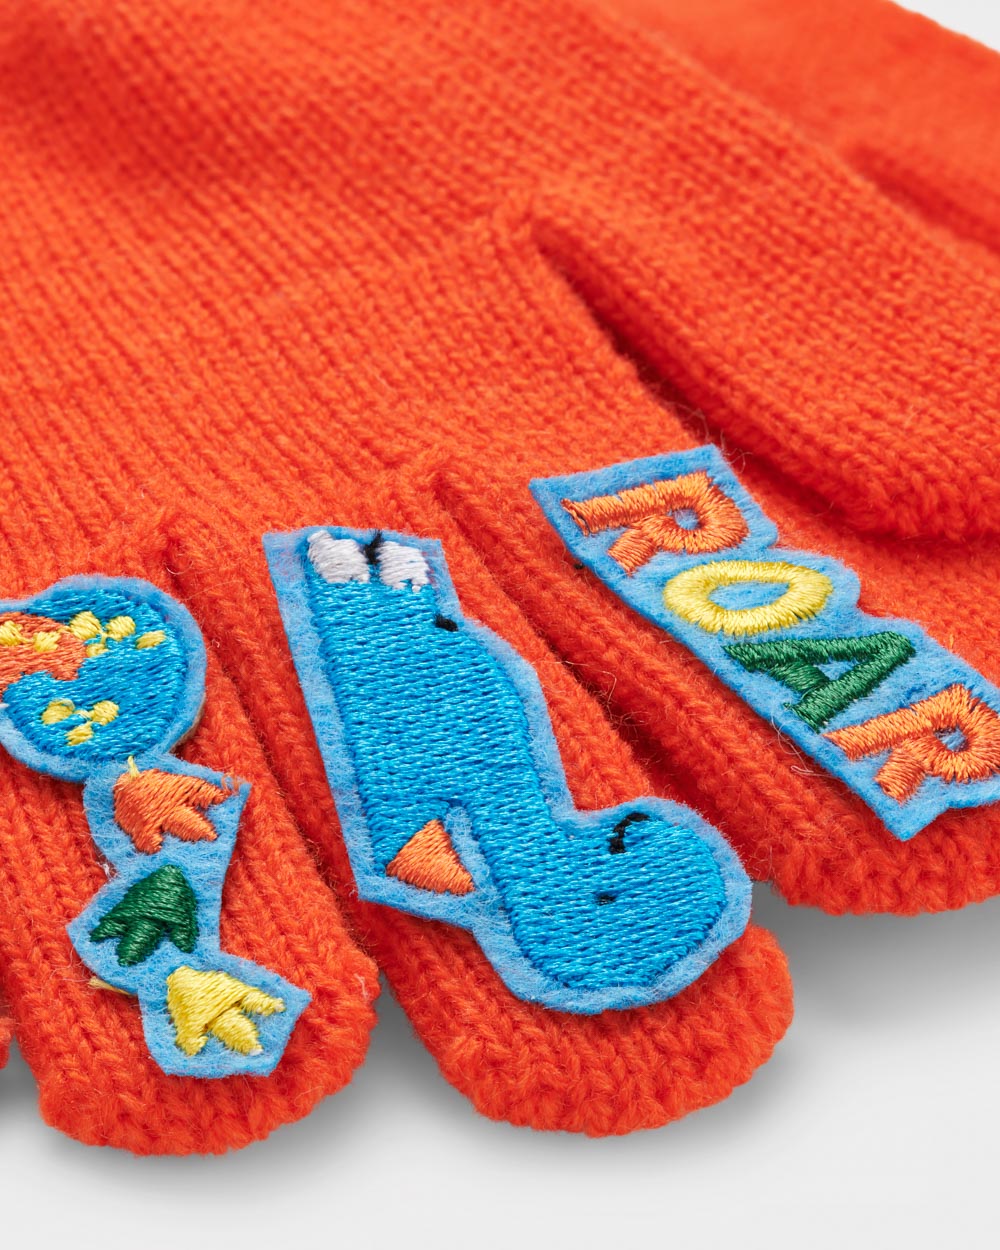 Dinosaur Orange Boys Patch Gloves - Small Stuff Accessories